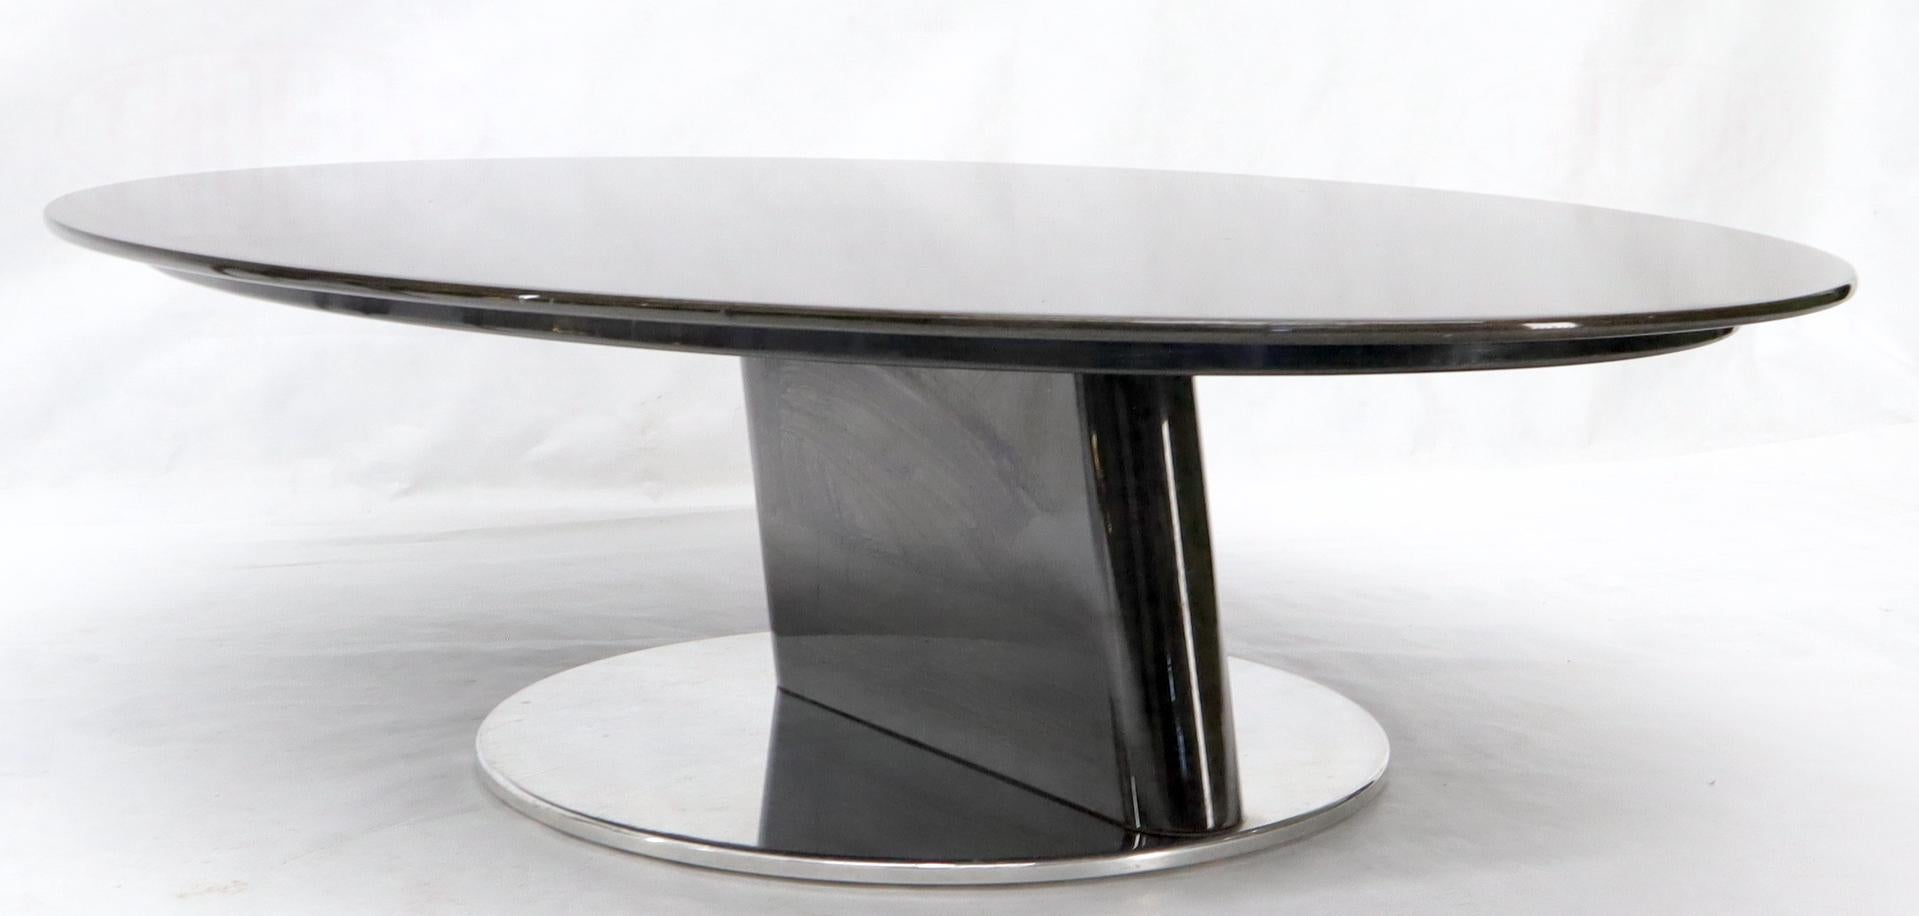 20th Century Oval Grey Bird's-Eye Maple Top Heavy Steel Base Coffee Table by Saporiti For Sale